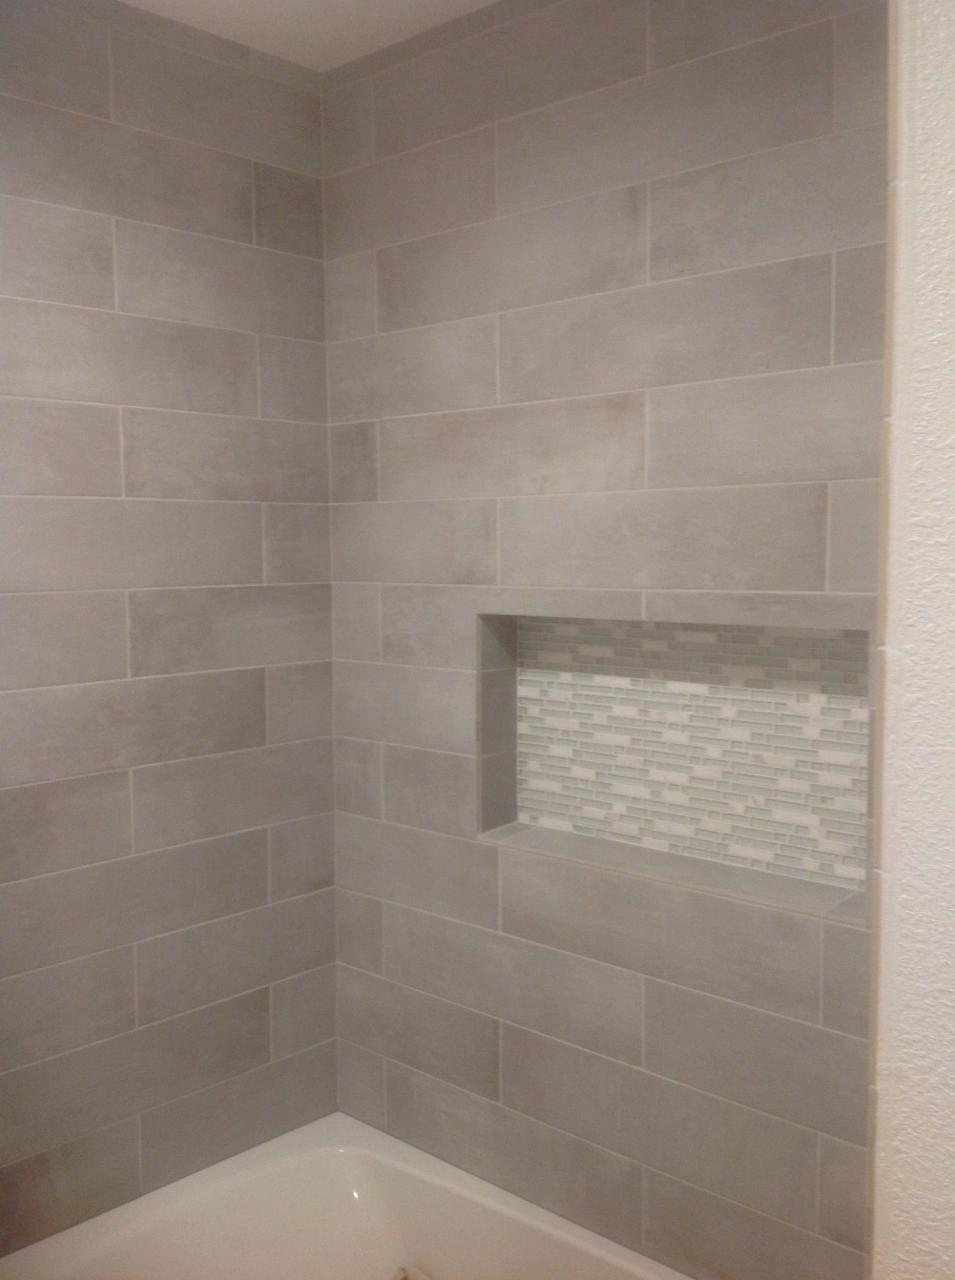 Lowes Bathroom Tiles Ideas Bathroom shower tile, Bathroom wall tile